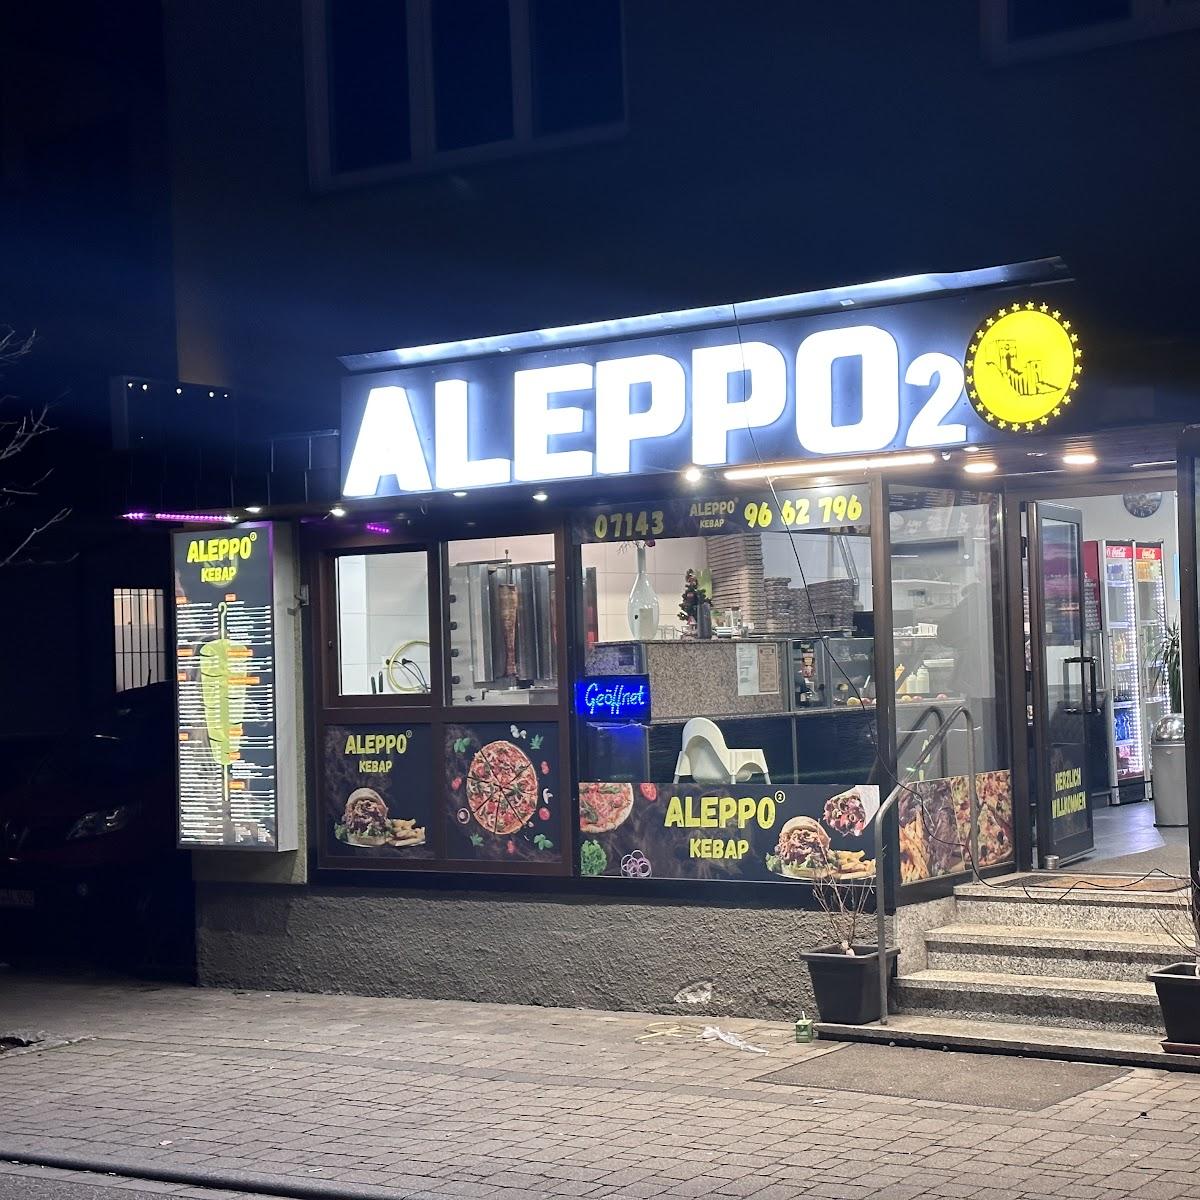 Restaurant "Aleppo Kebap 2" in Kirchheim am Neckar